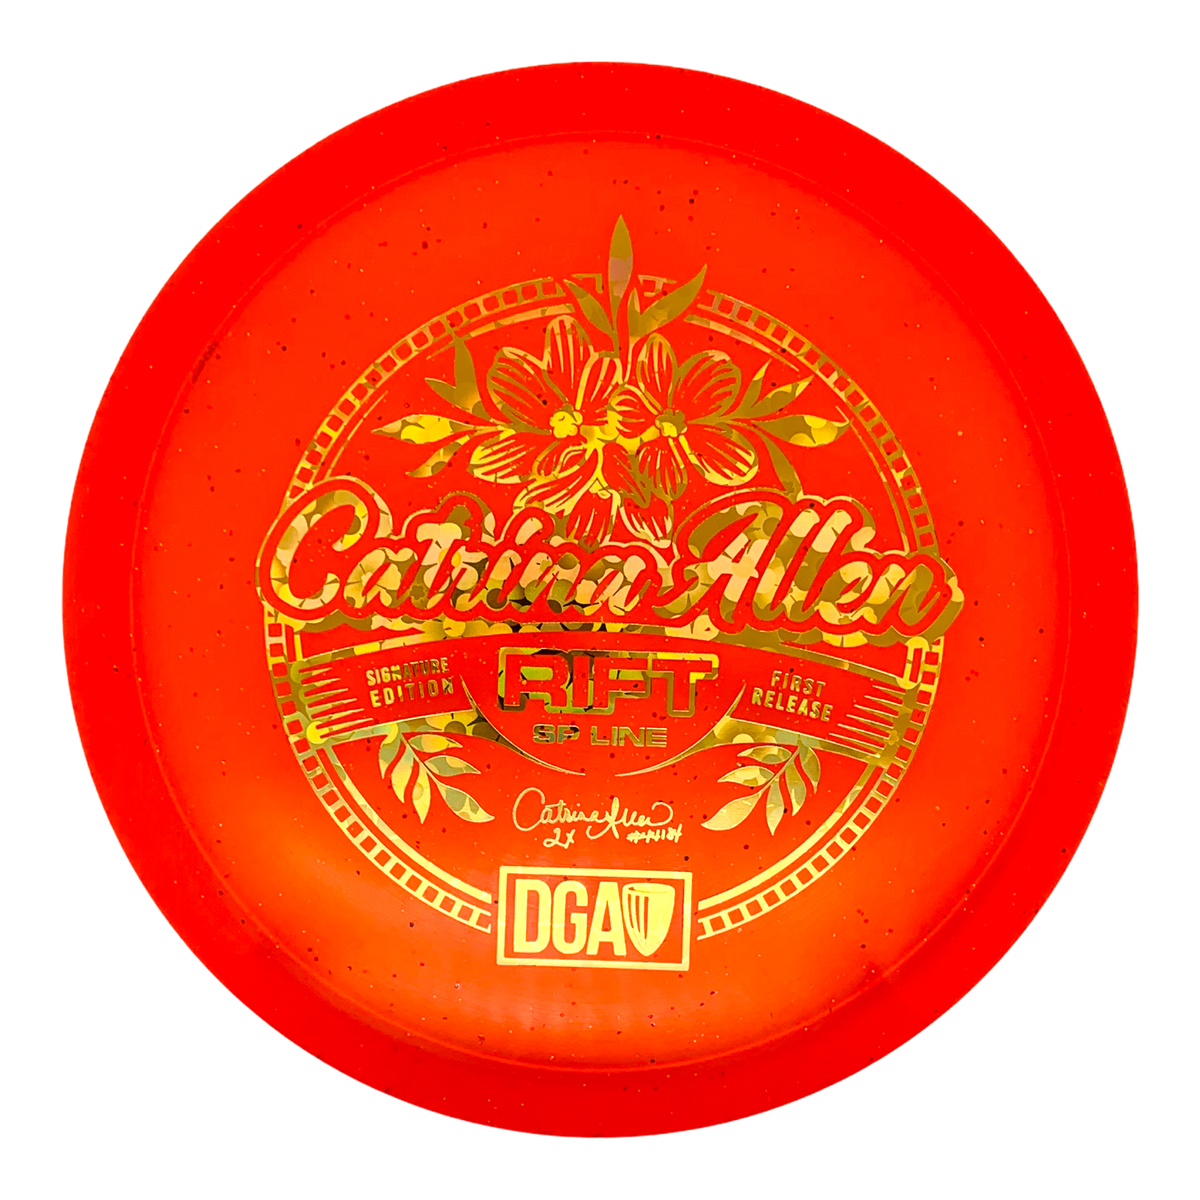 DGA Catrina Allen Signature Edition SP Rift - (First Release)